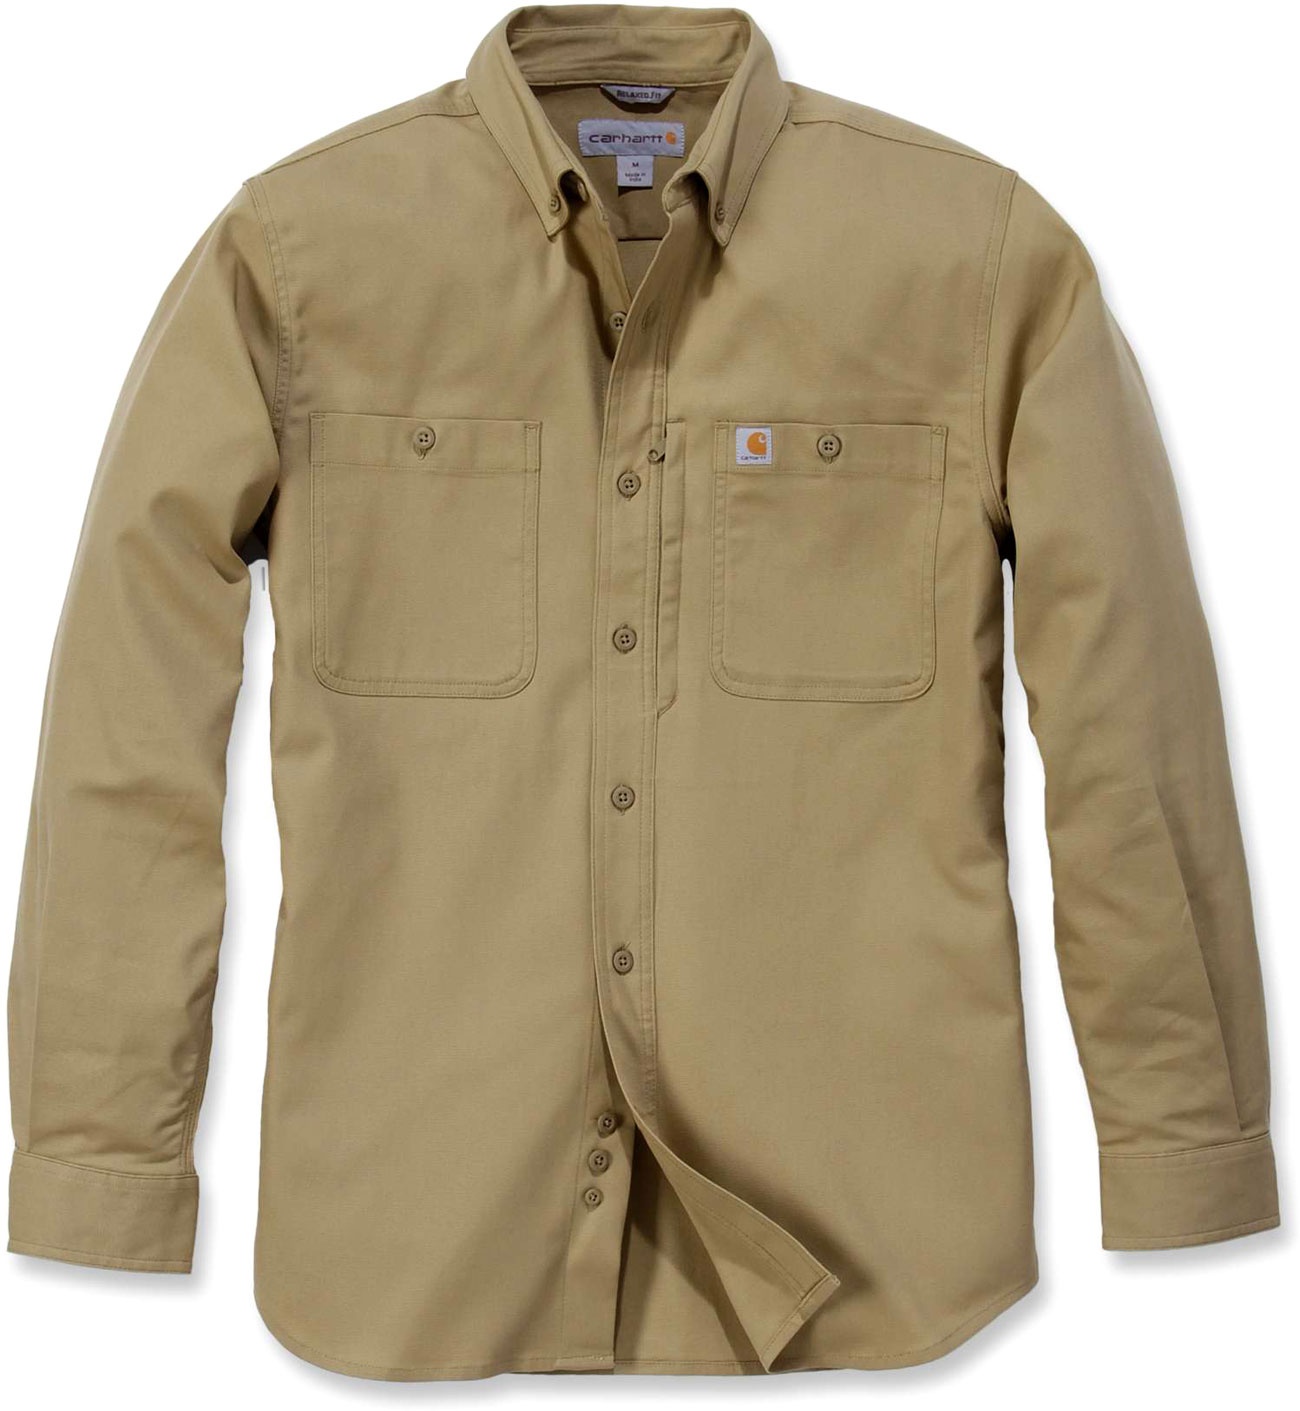 Carhartt Rugged Professional Work, chemise - Marron - XL